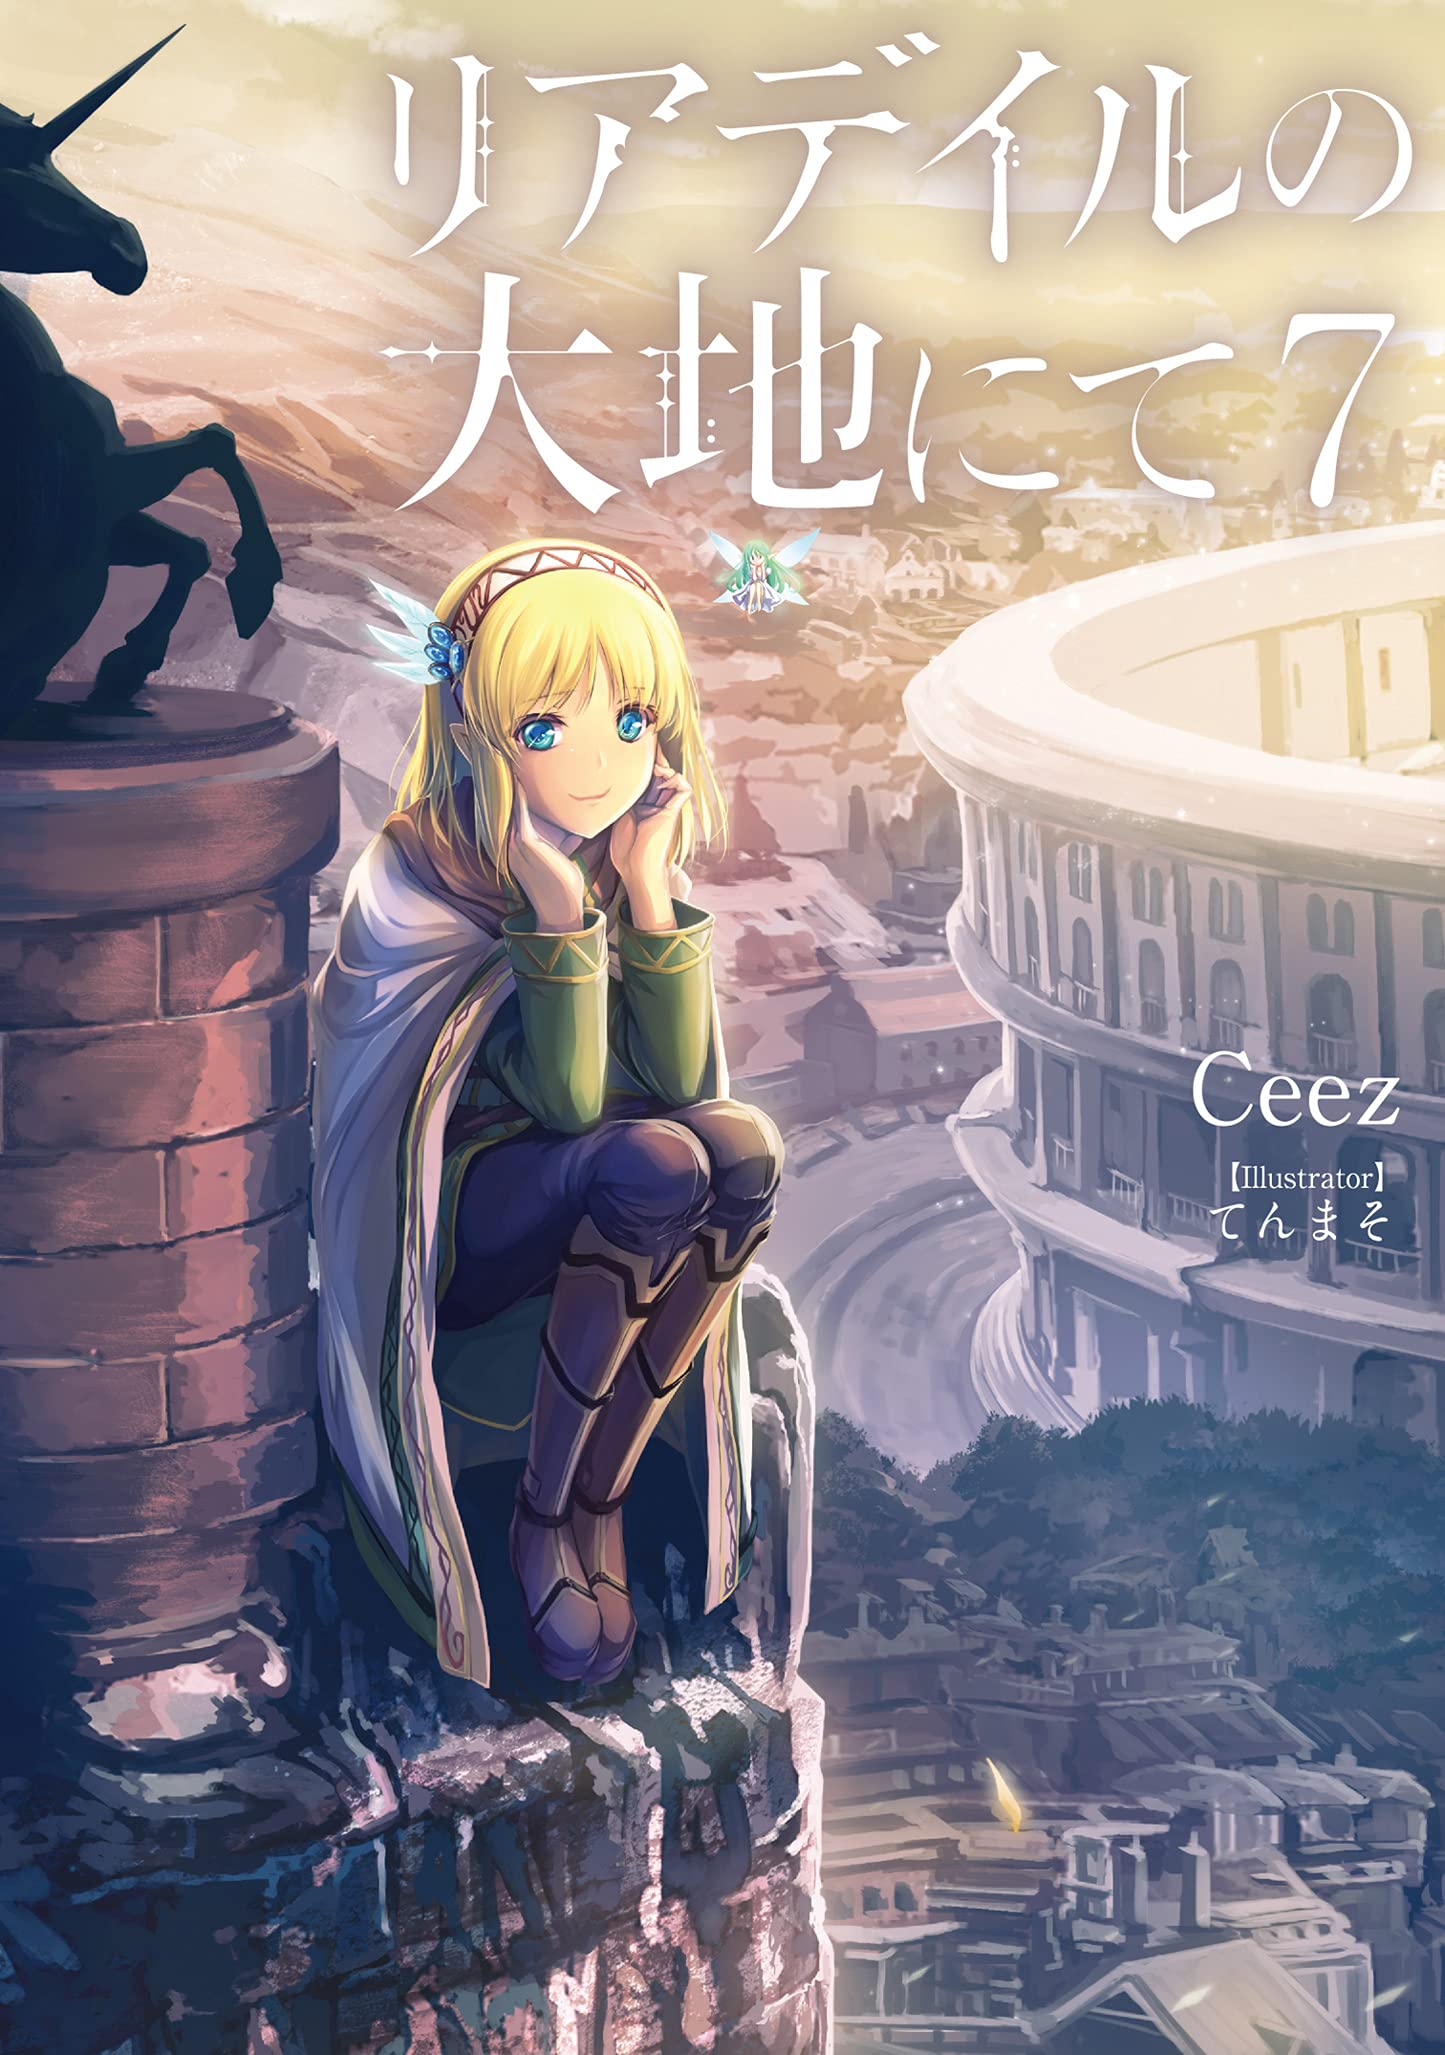 Ceez's Fantasy Light Novel In The Land of Leadale Gets Anime Adaptation -  Crunchyroll News